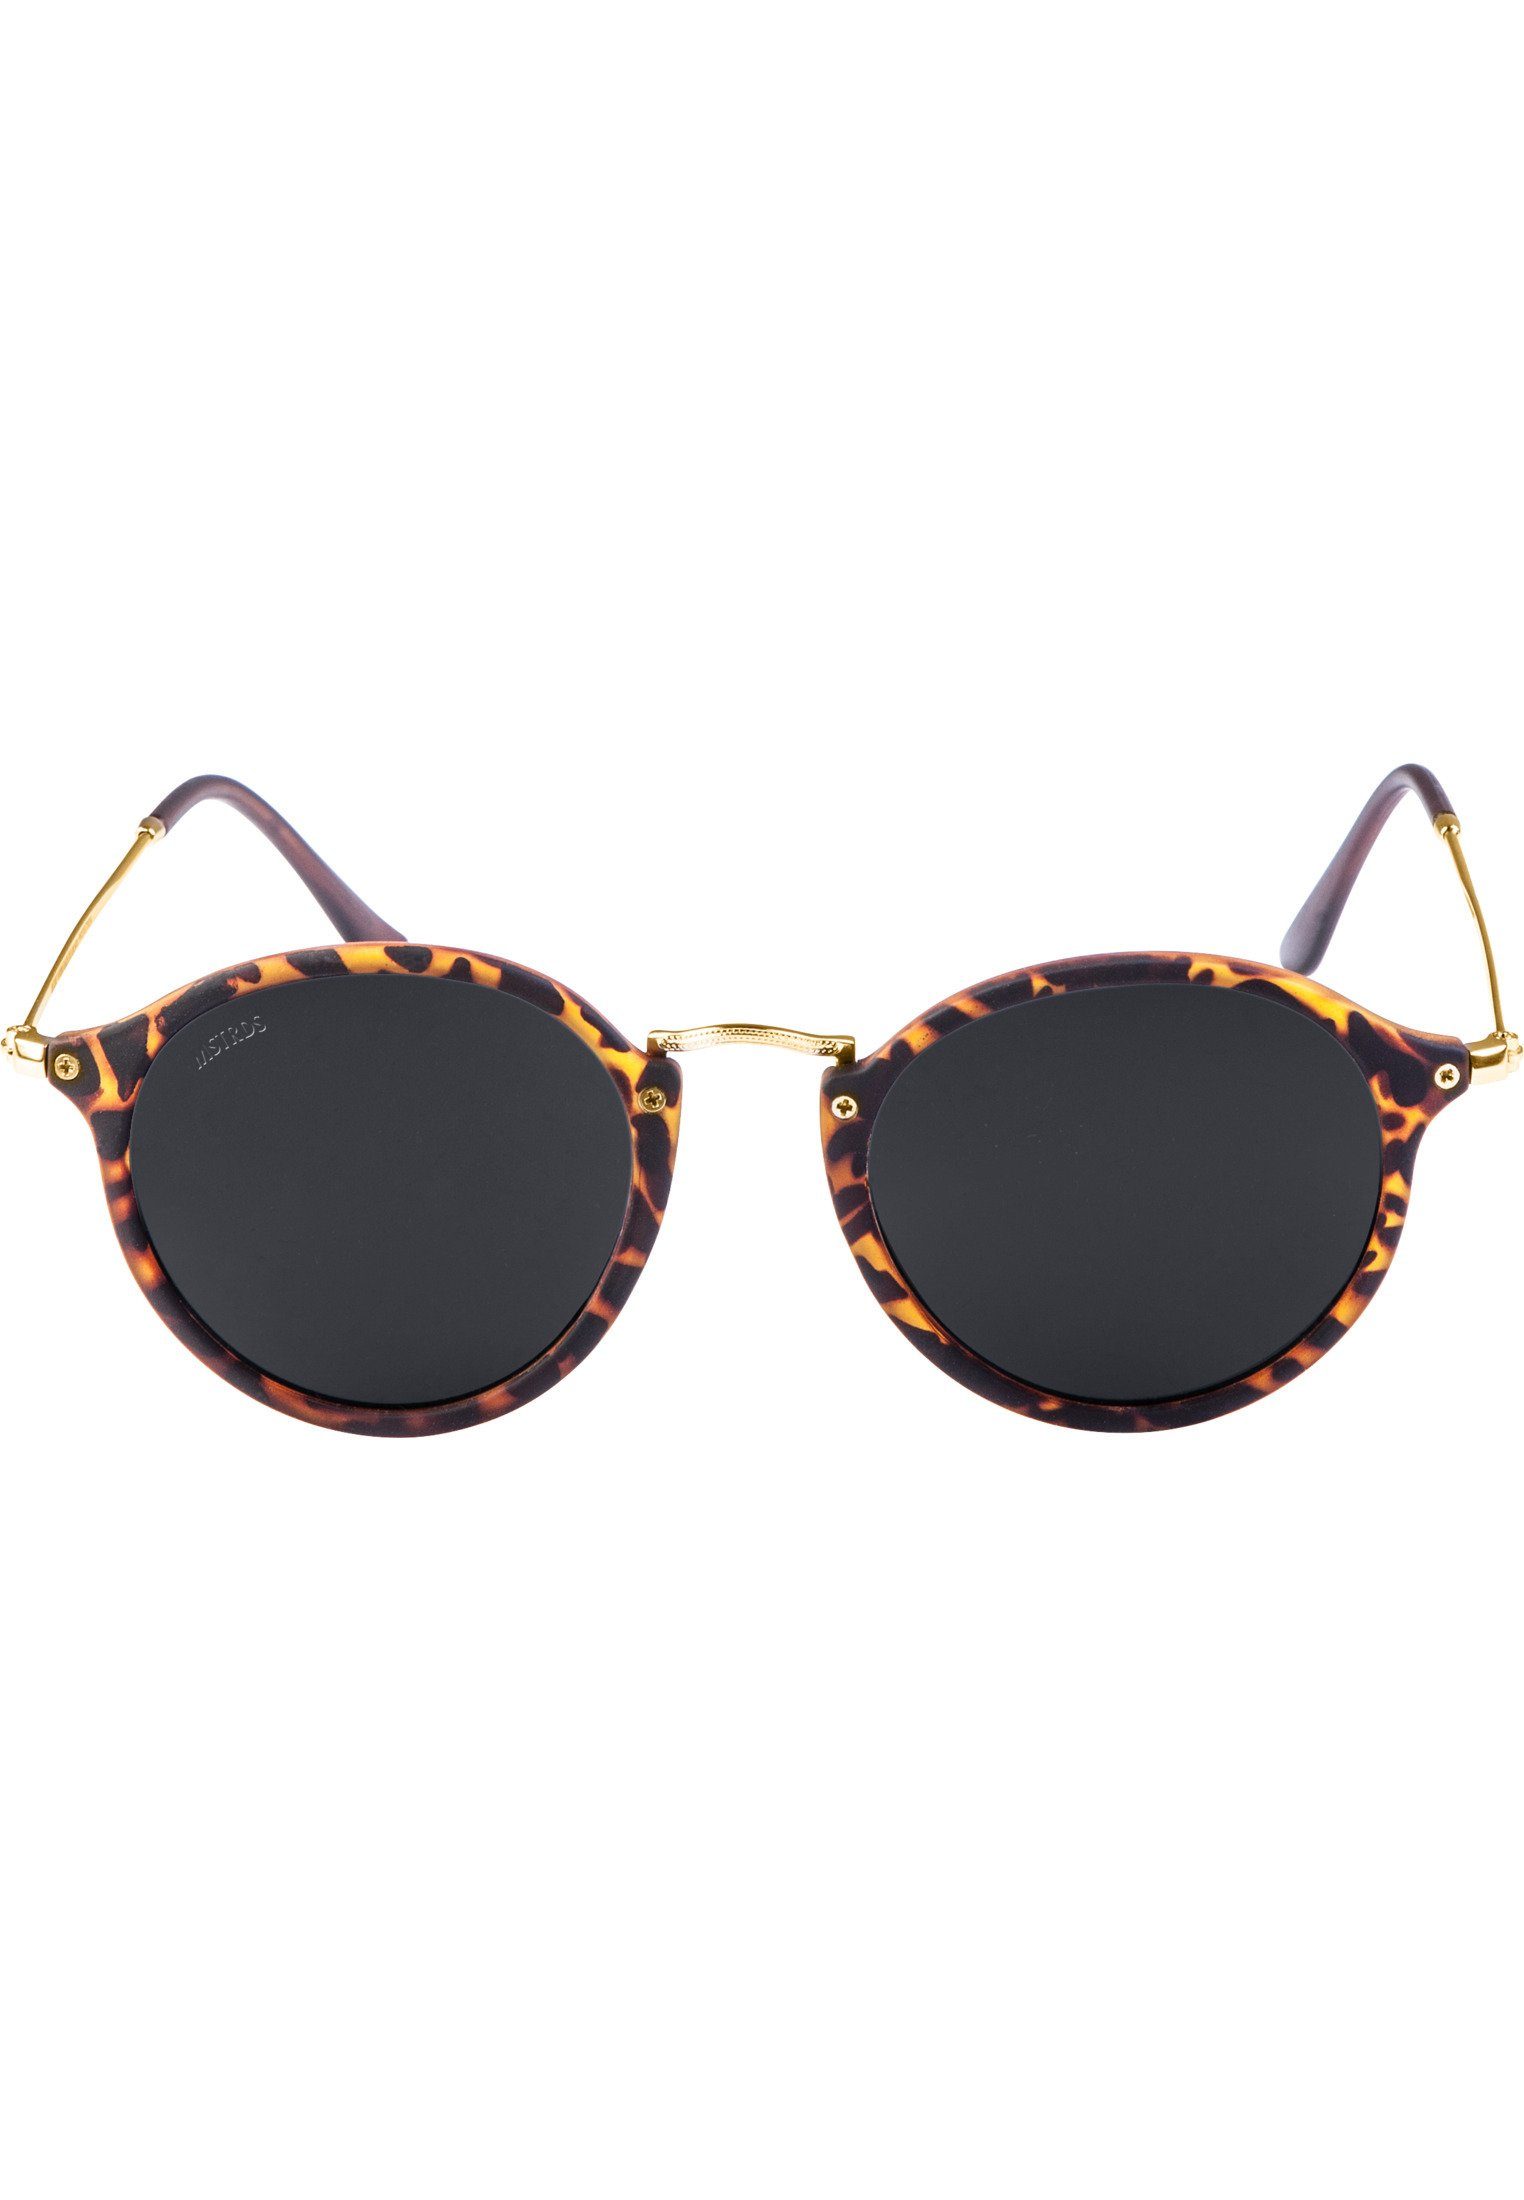 Sunglasses havanna/grey Accessoires MSTRDS Sonnenbrille Spy